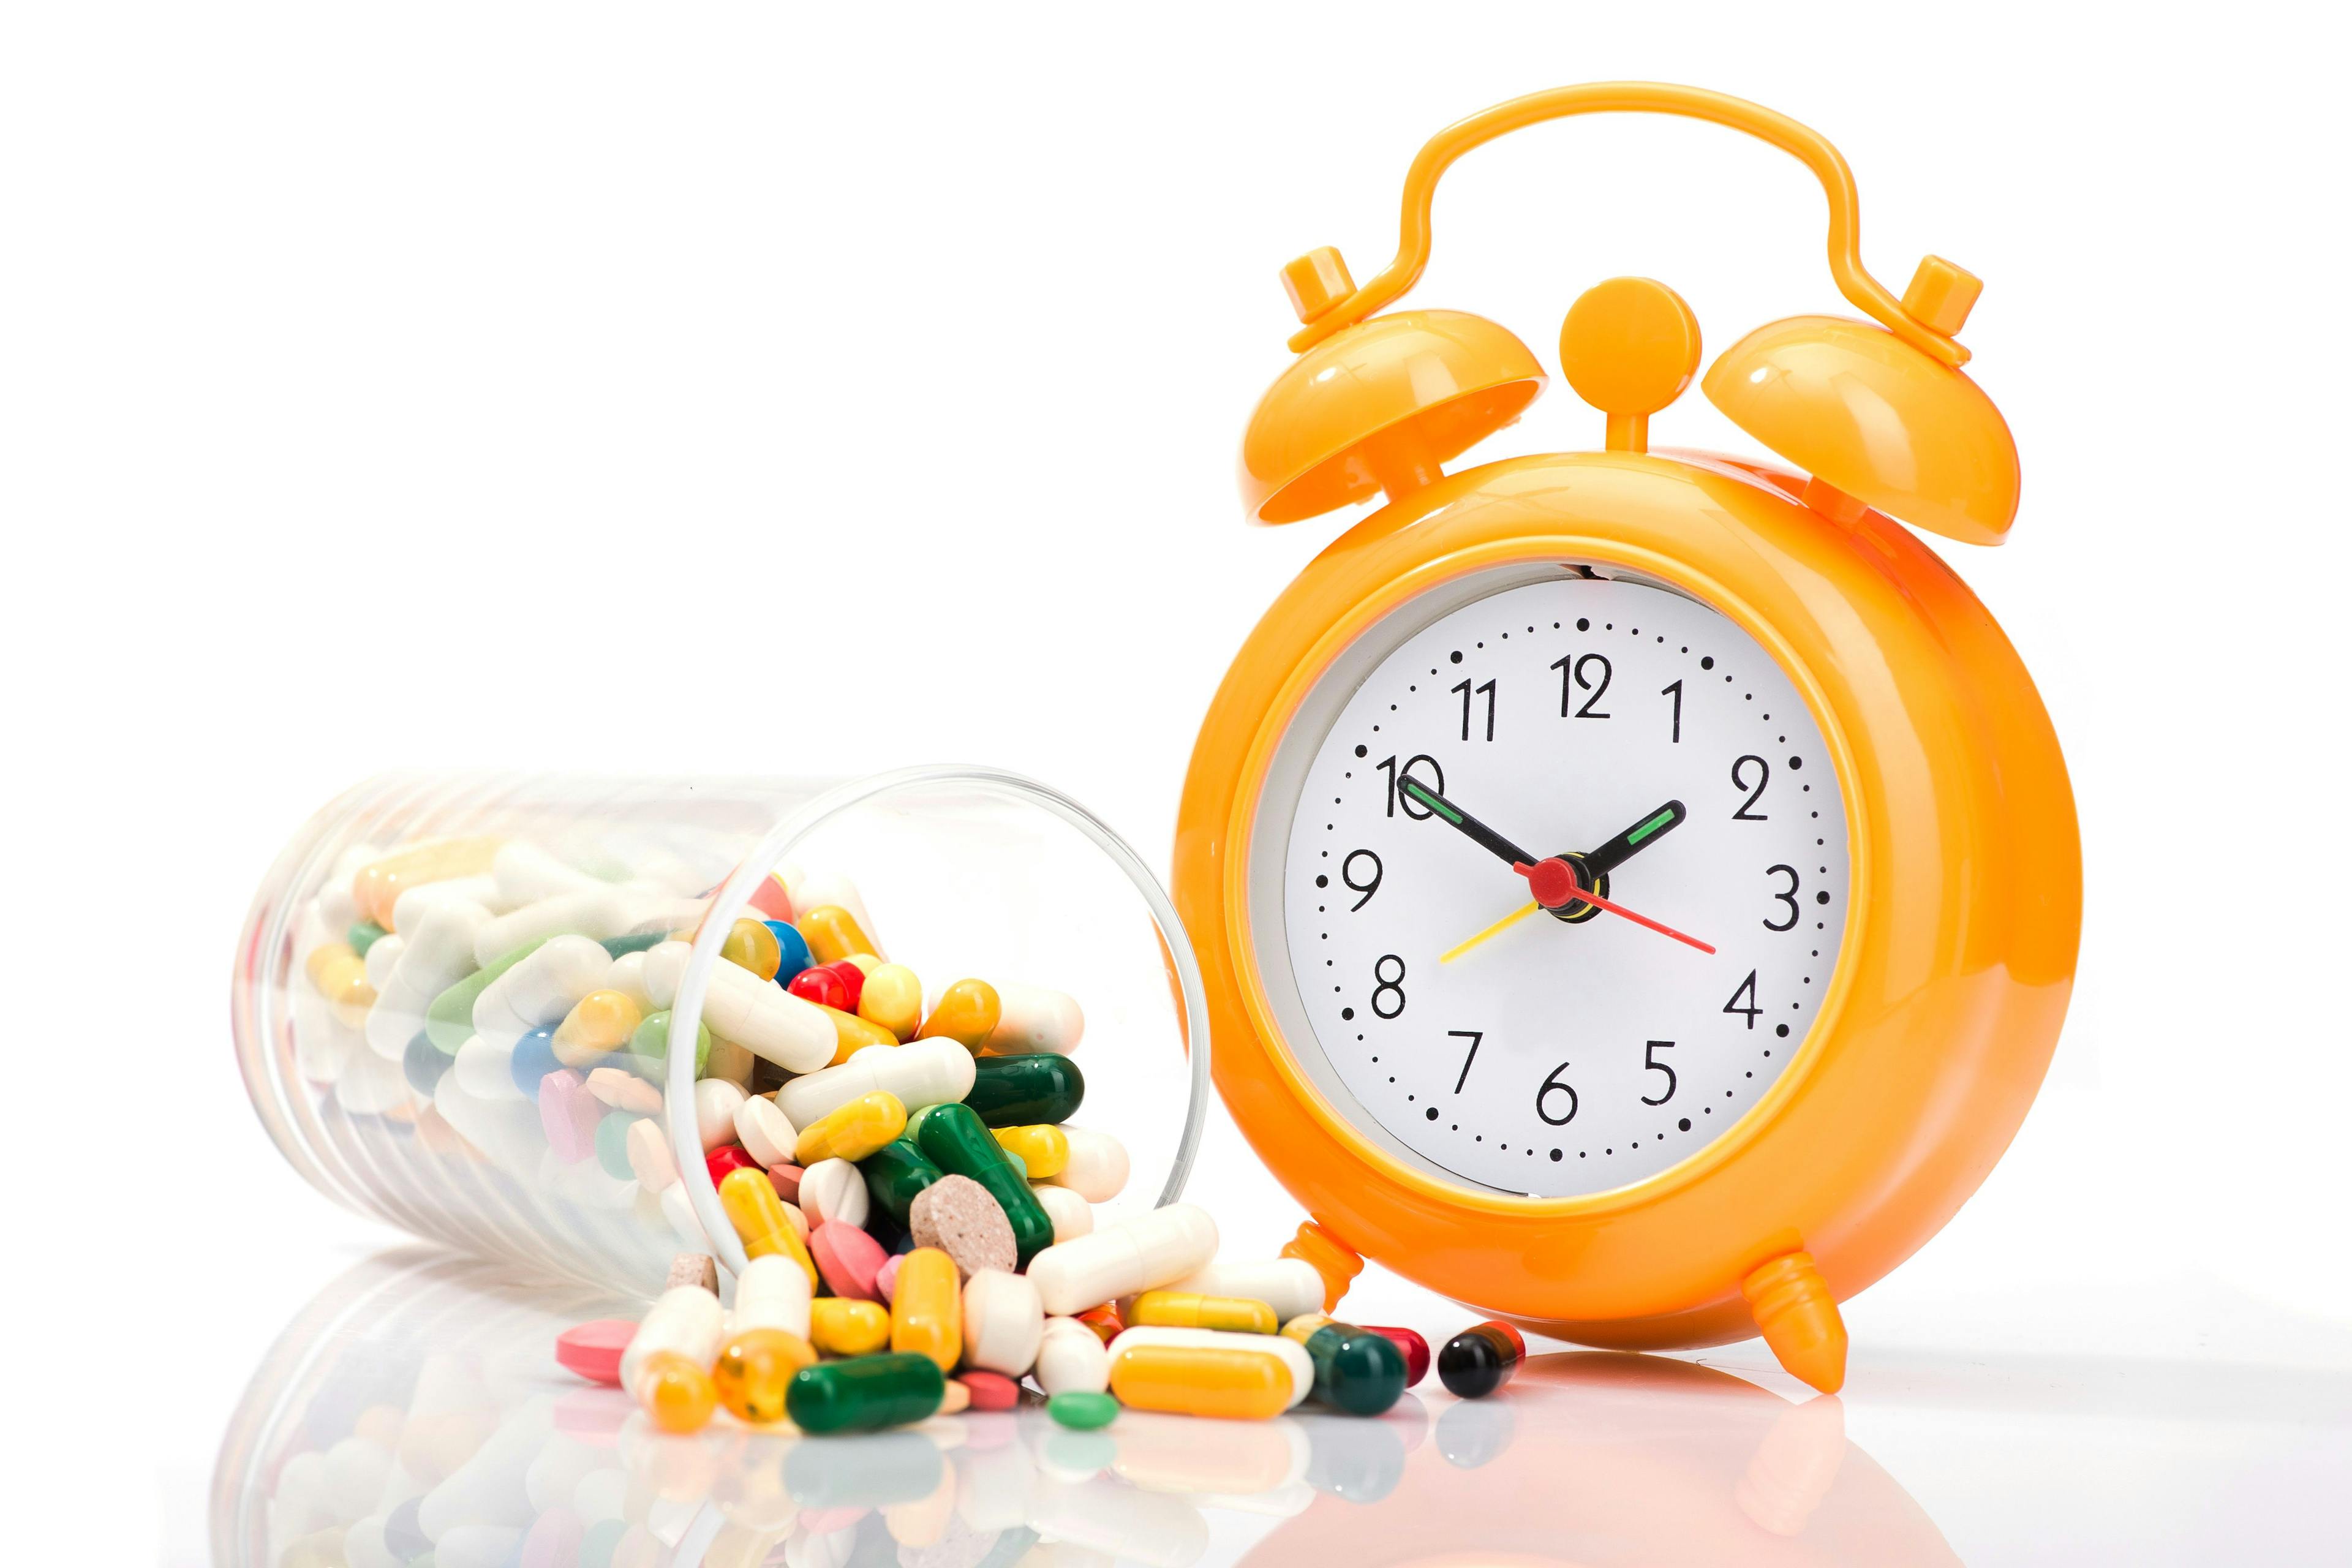 Do Shorter Primary Care Visits Lead to More Inappropriate Prescriptions?